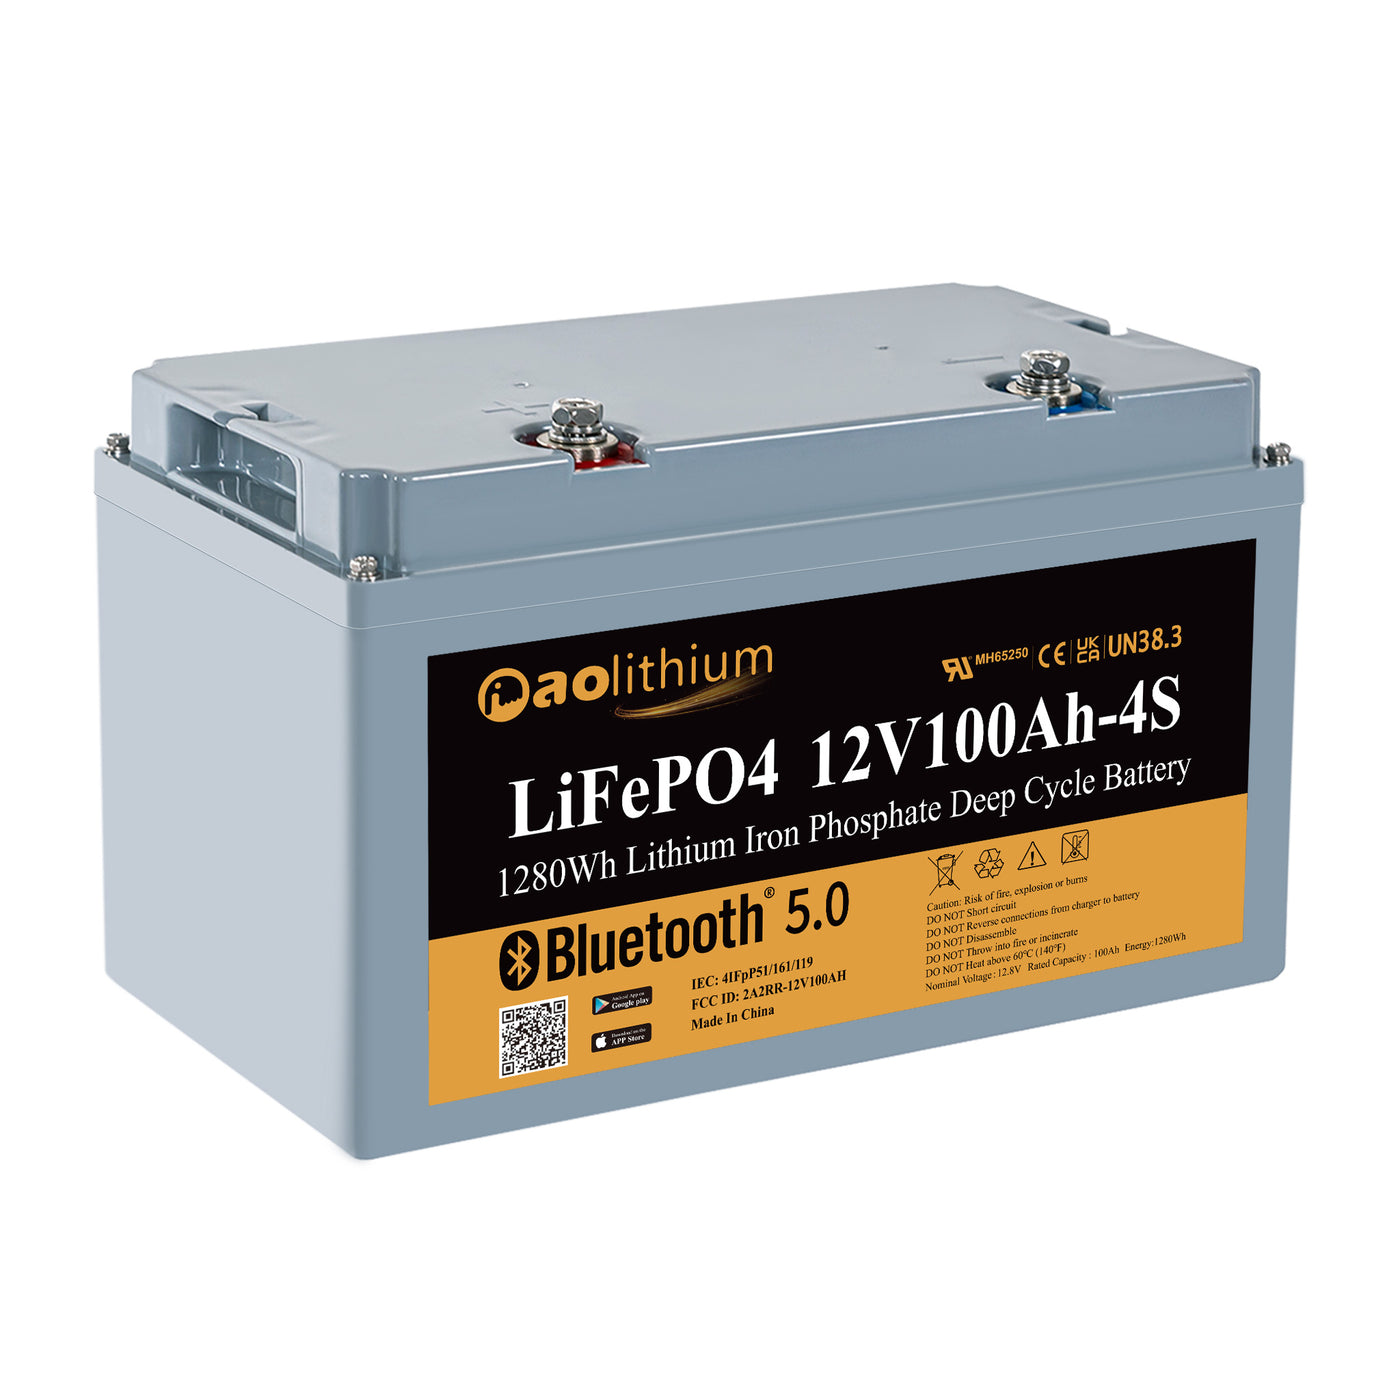 12V100Ah-4S Lithium LiFePO4 Battery